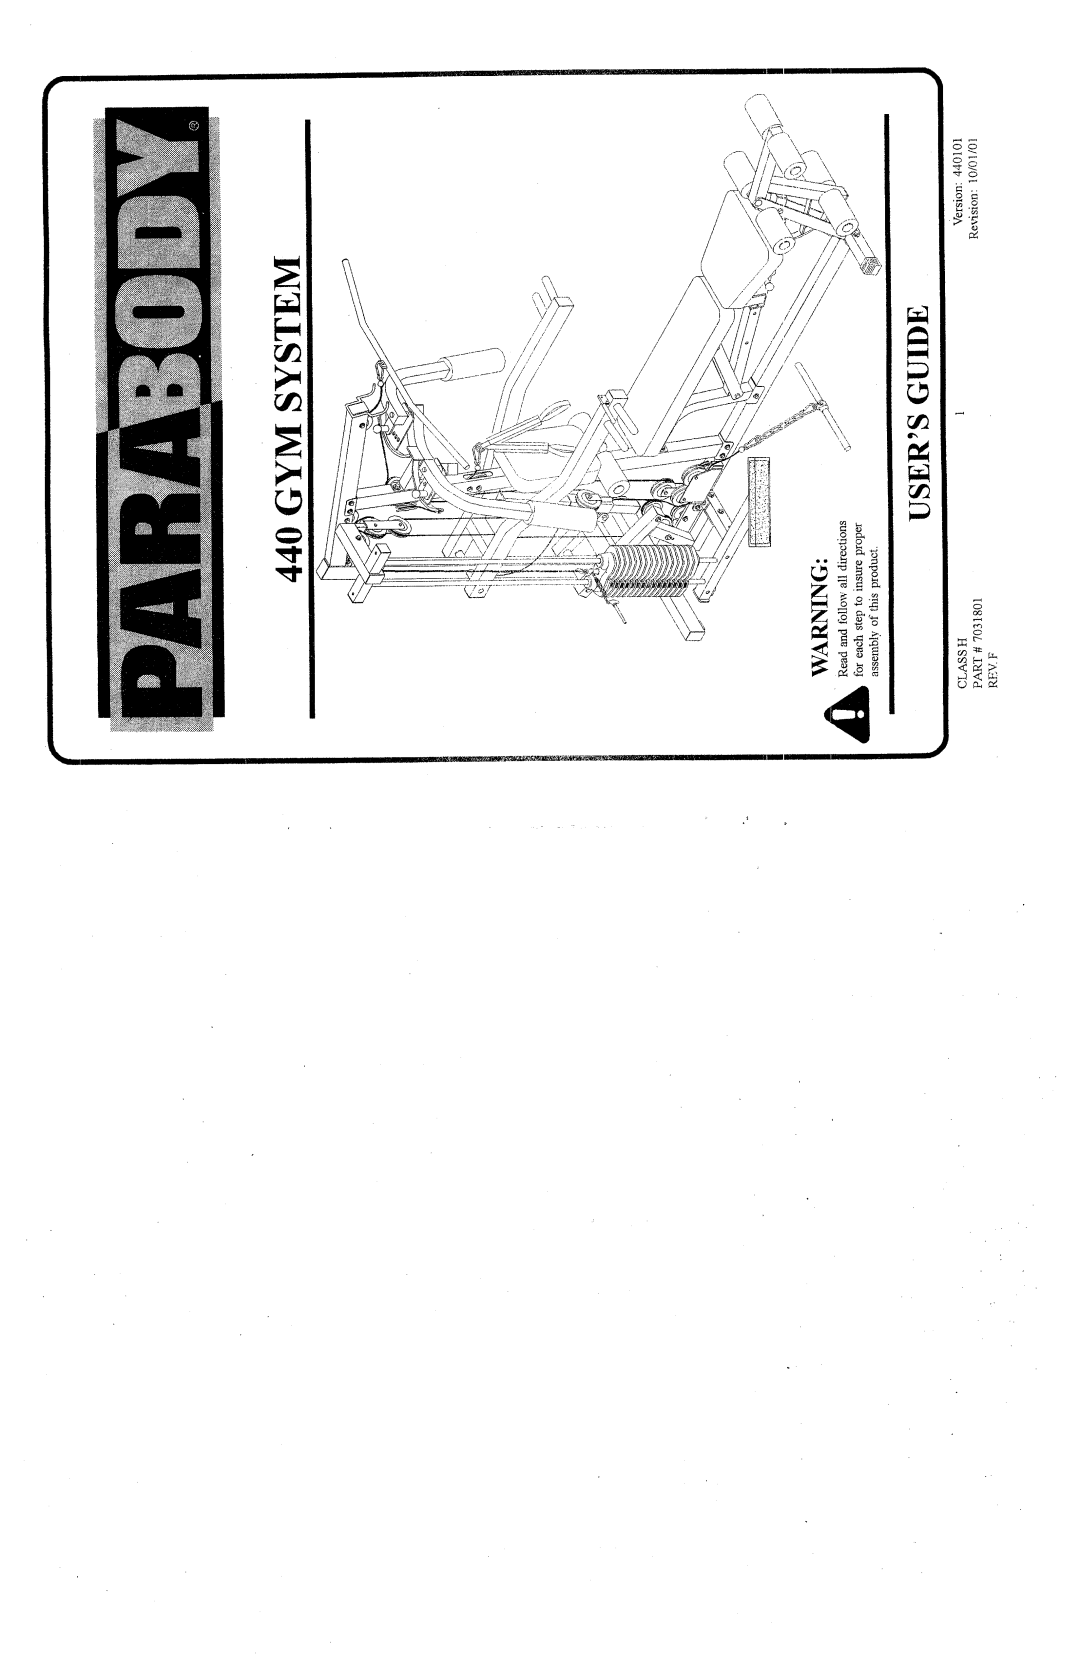 ParaBody 440 manual 